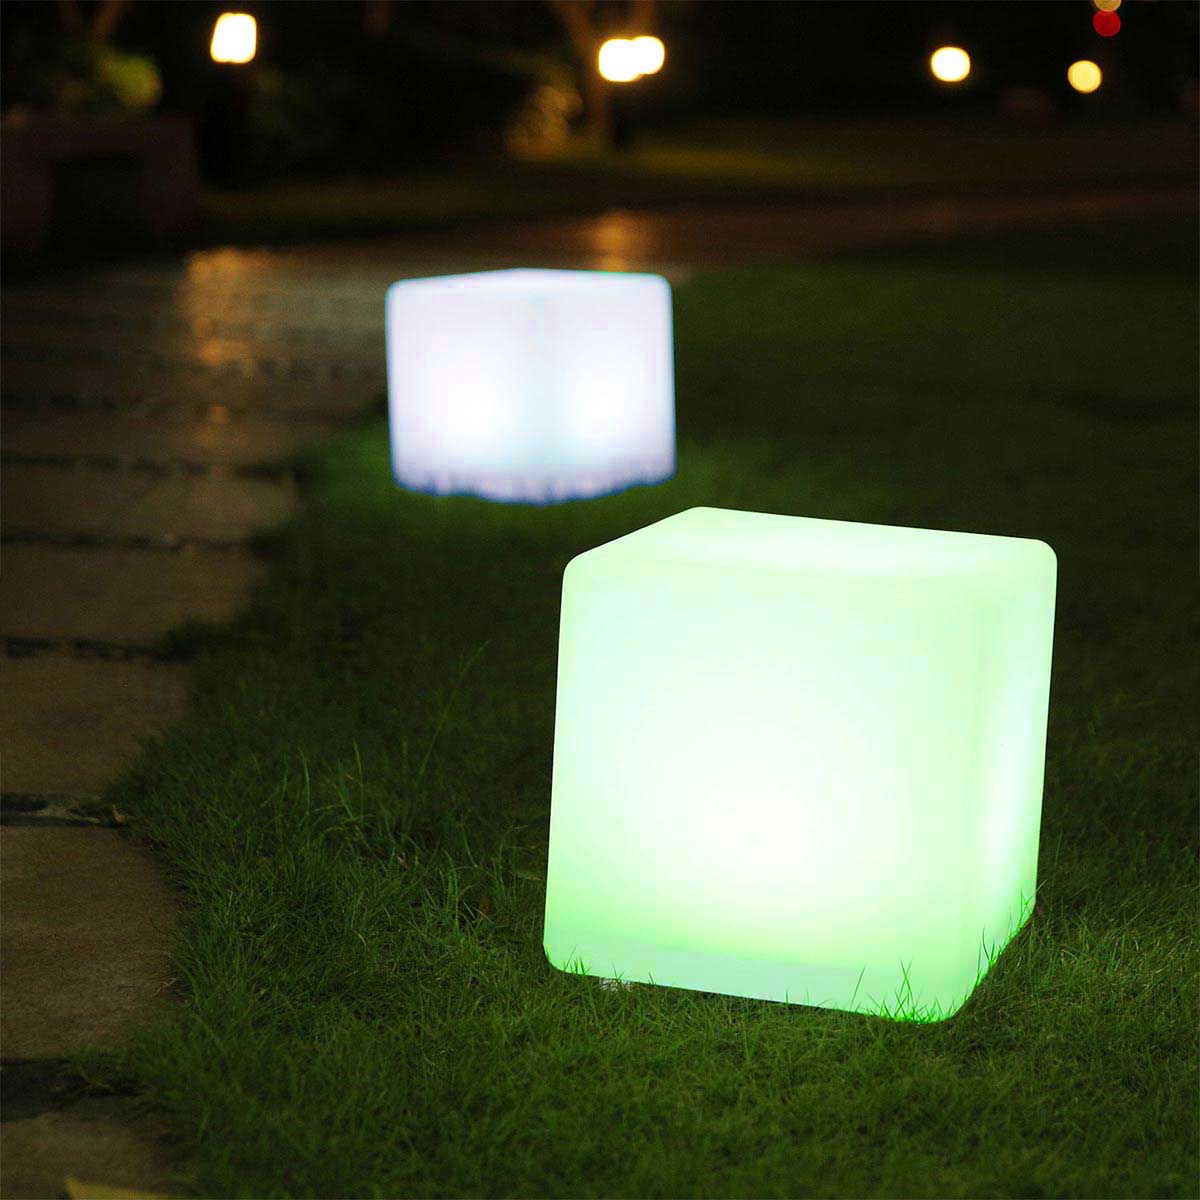 Cube LED lumineux - 30cm - Les locations du Tandem